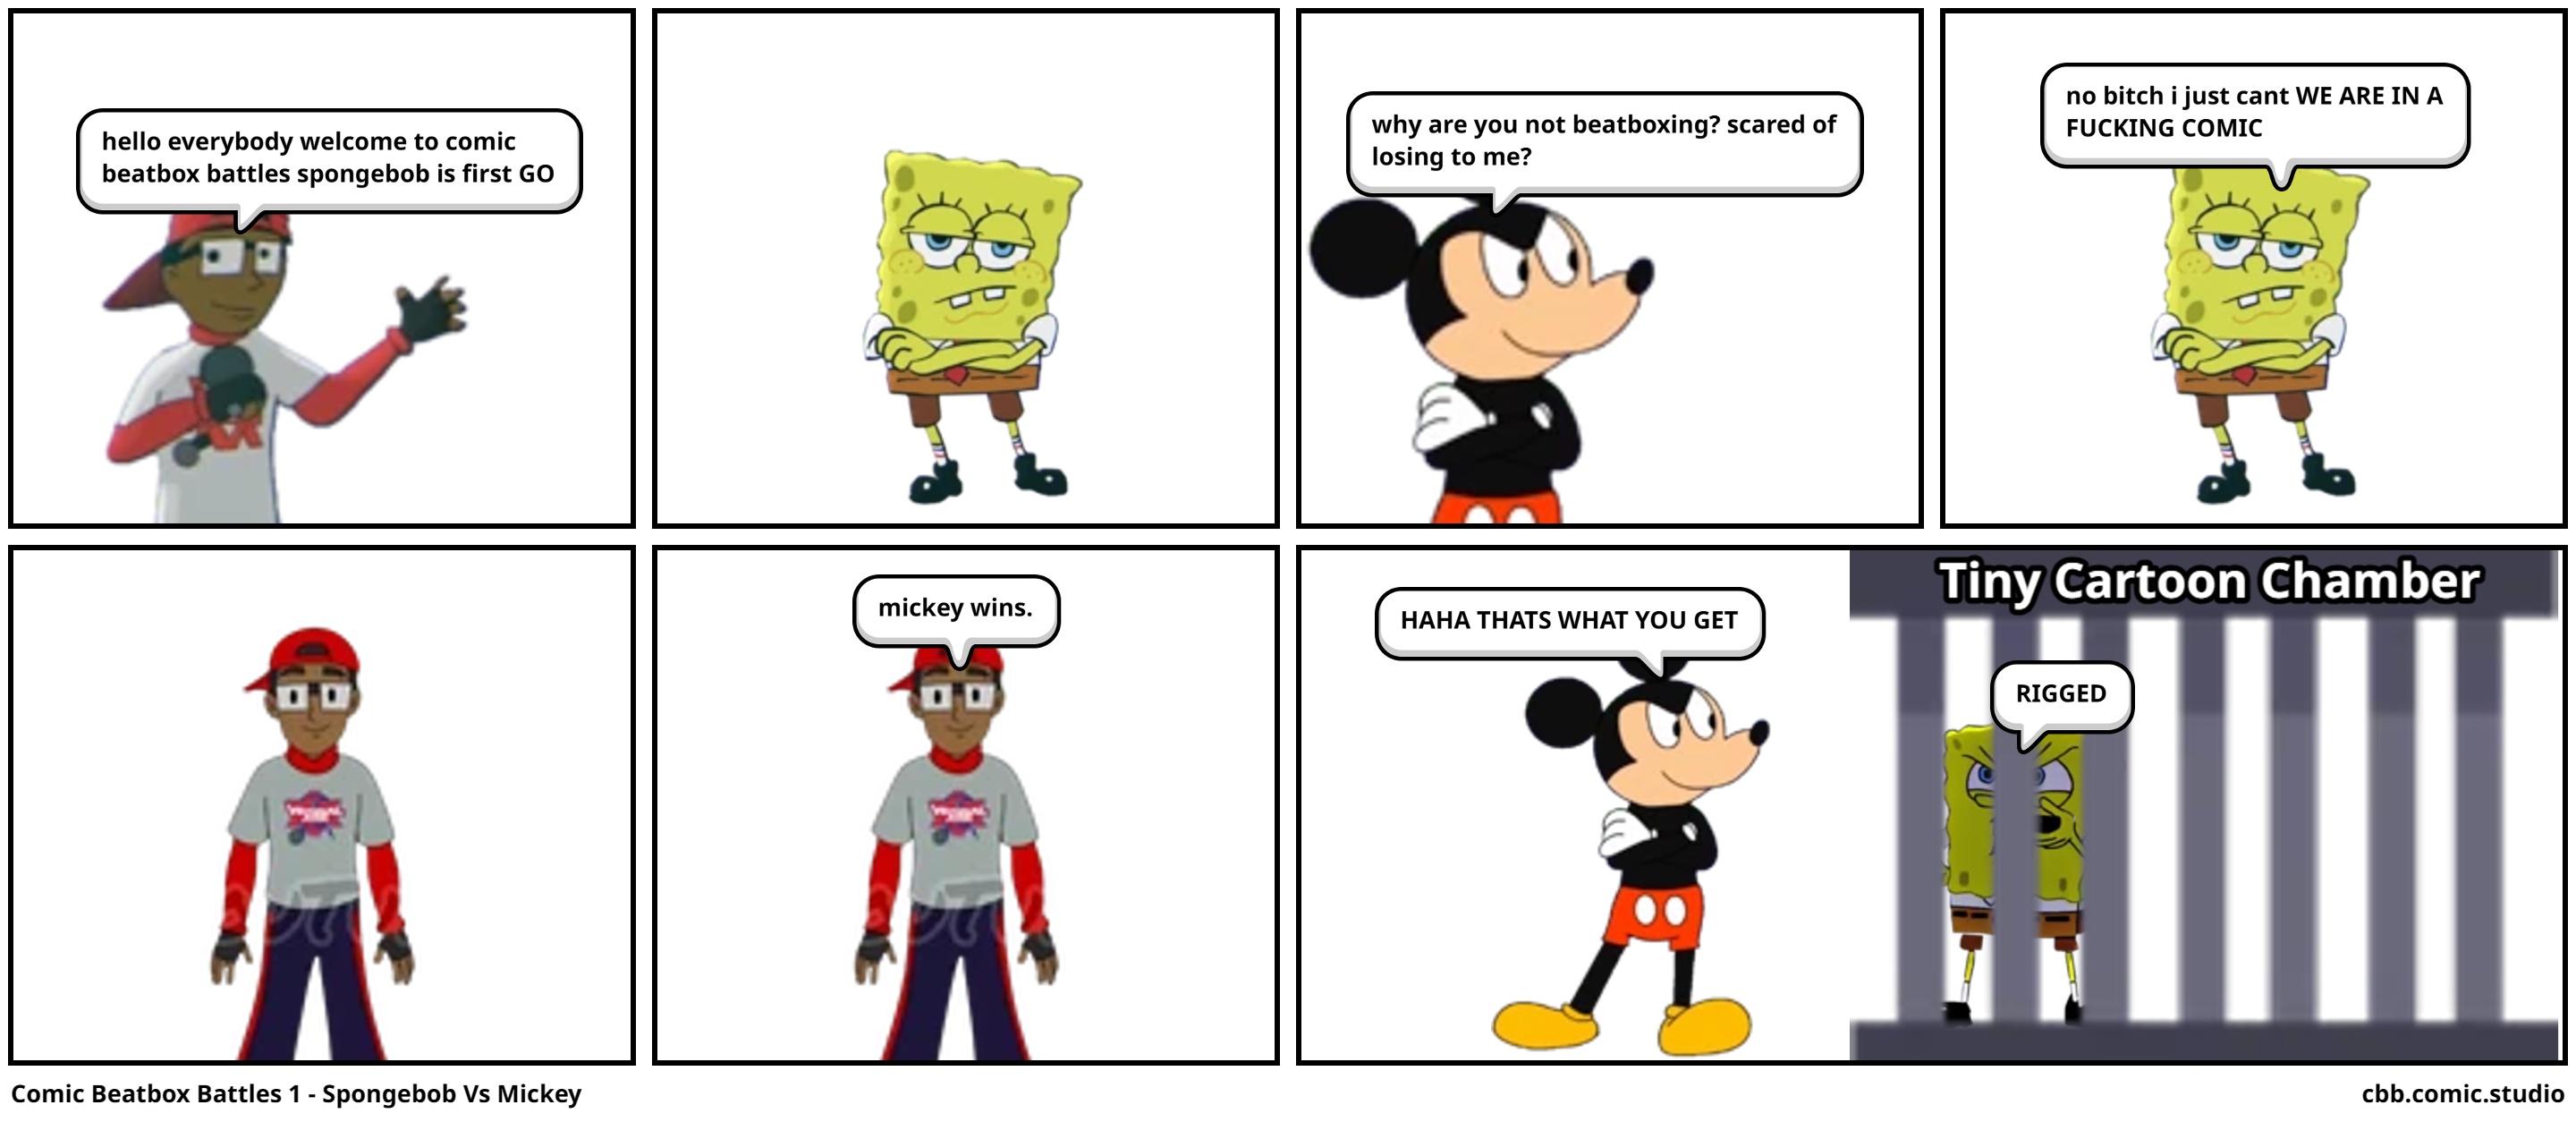 Comic Beatbox Battles 1 - Spongebob Vs Mickey